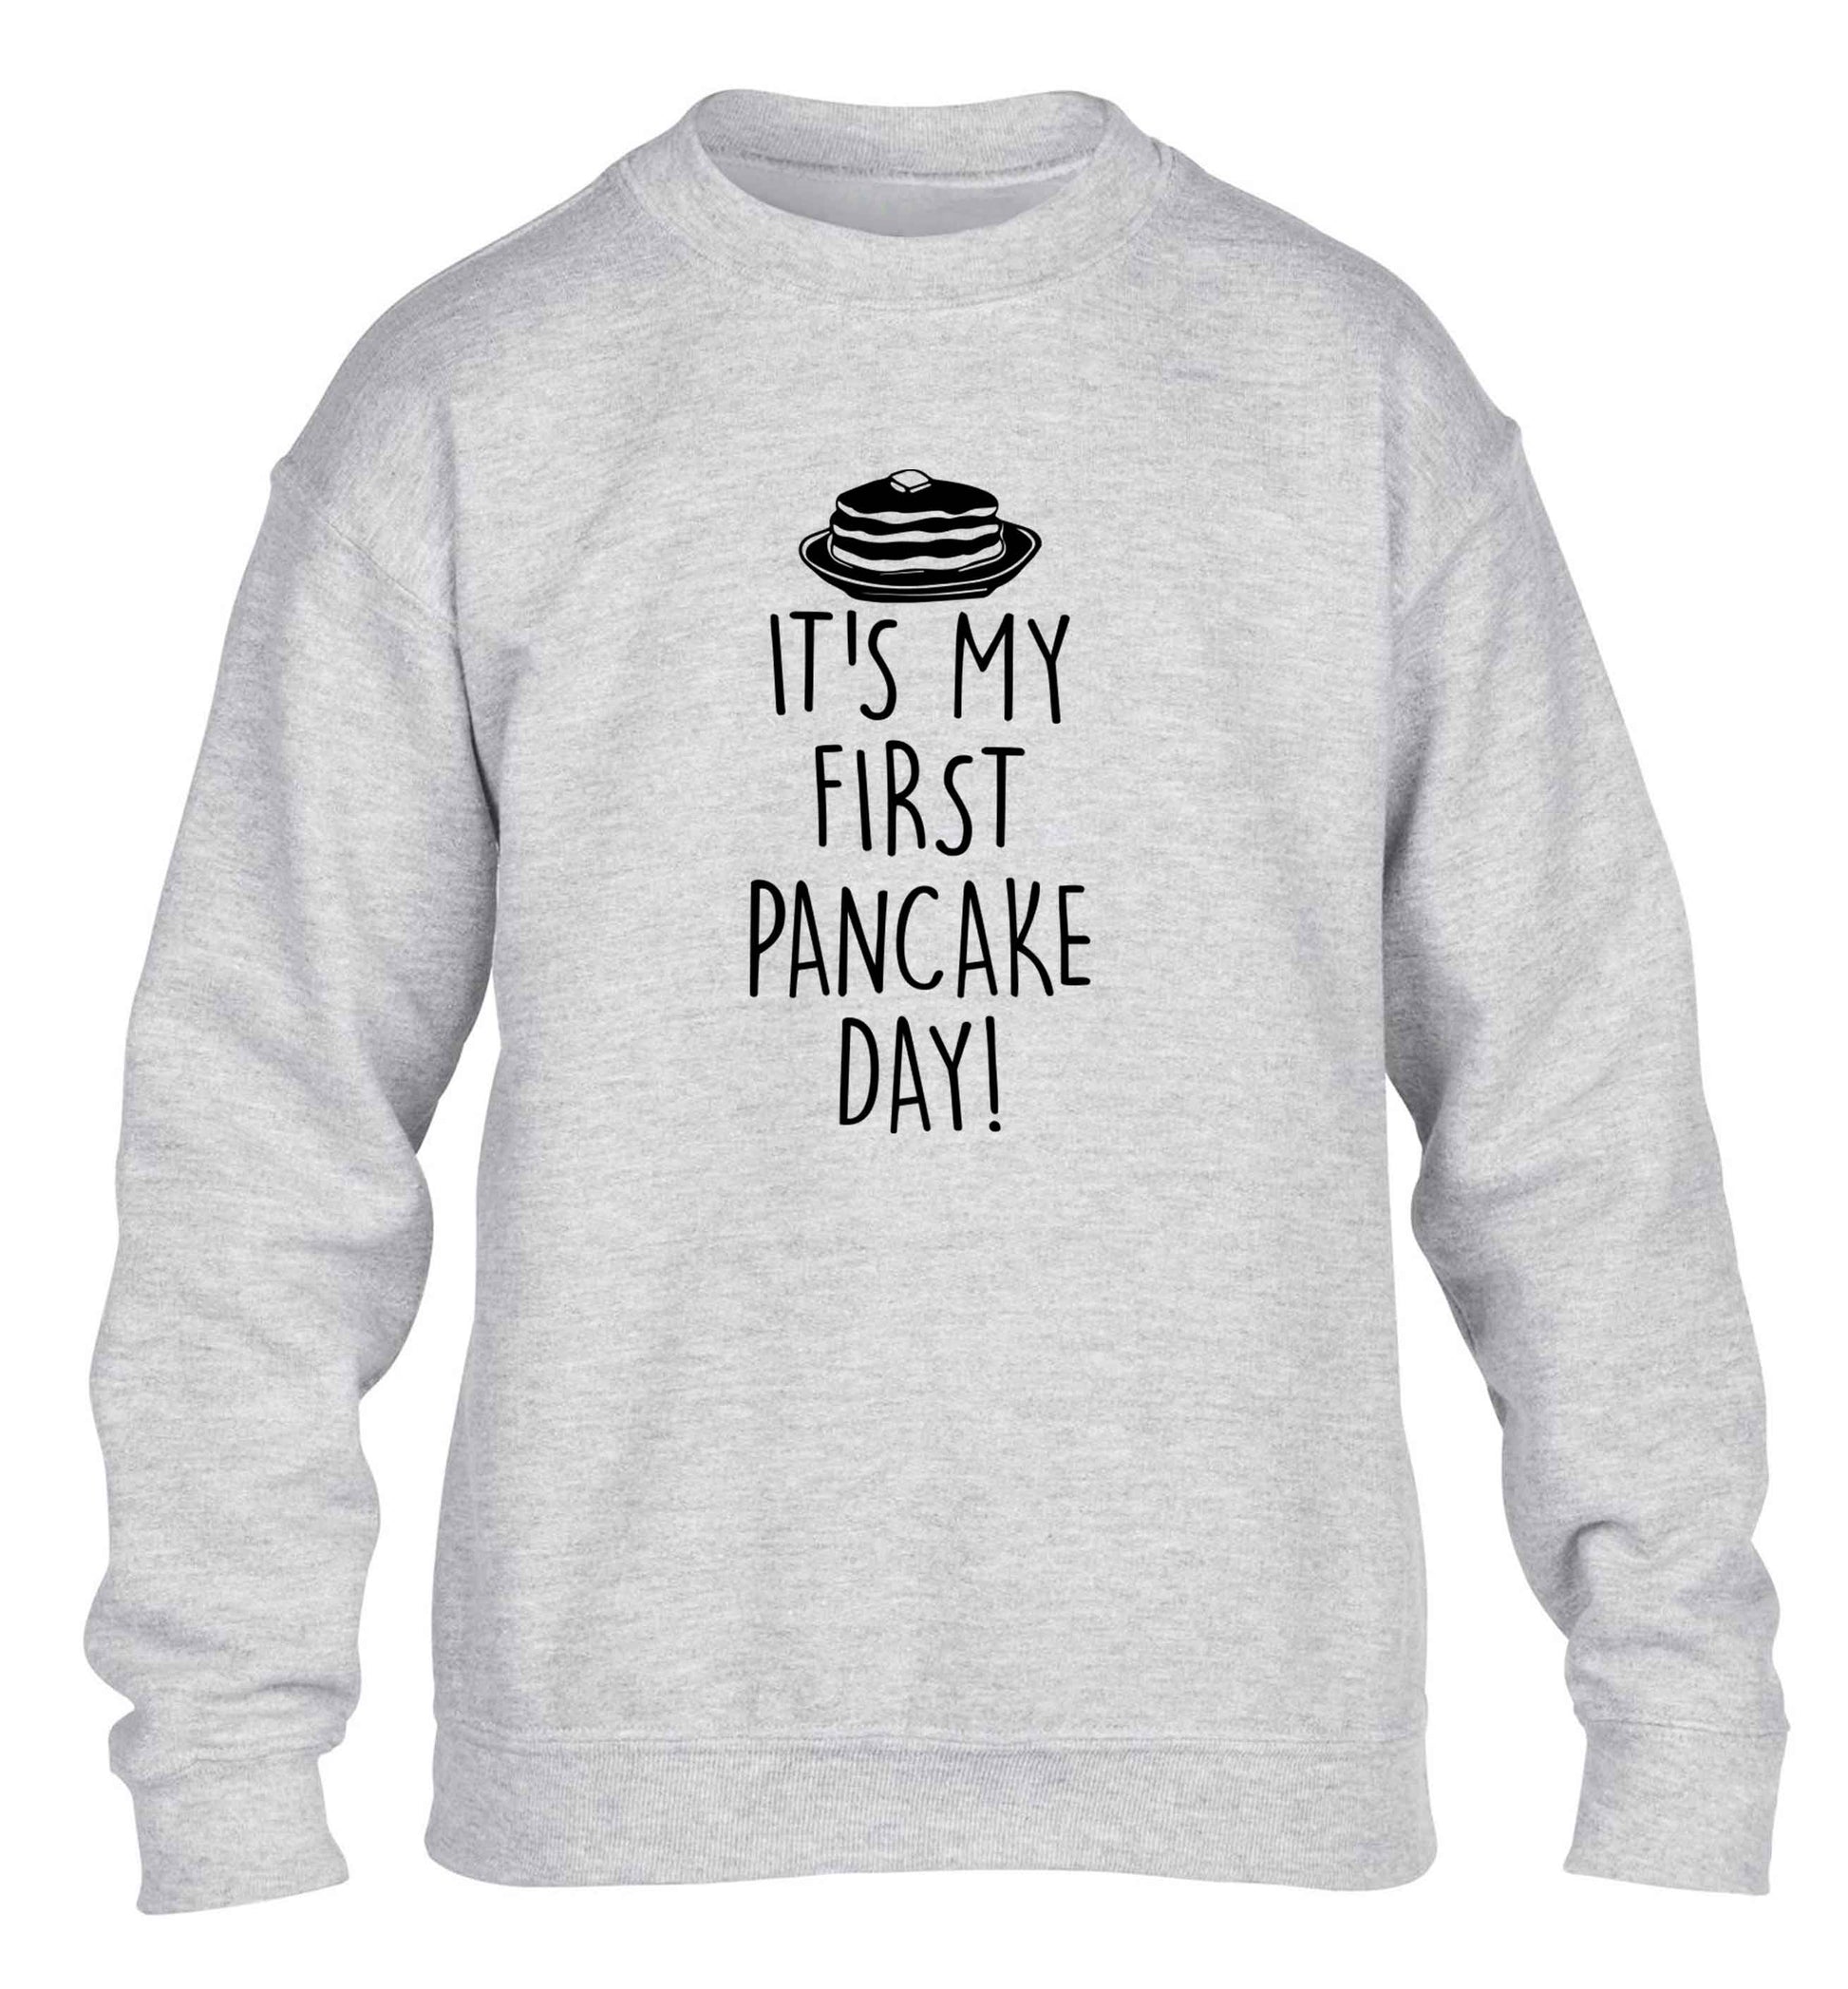 It's my first pancake day children's grey sweater 12-13 Years